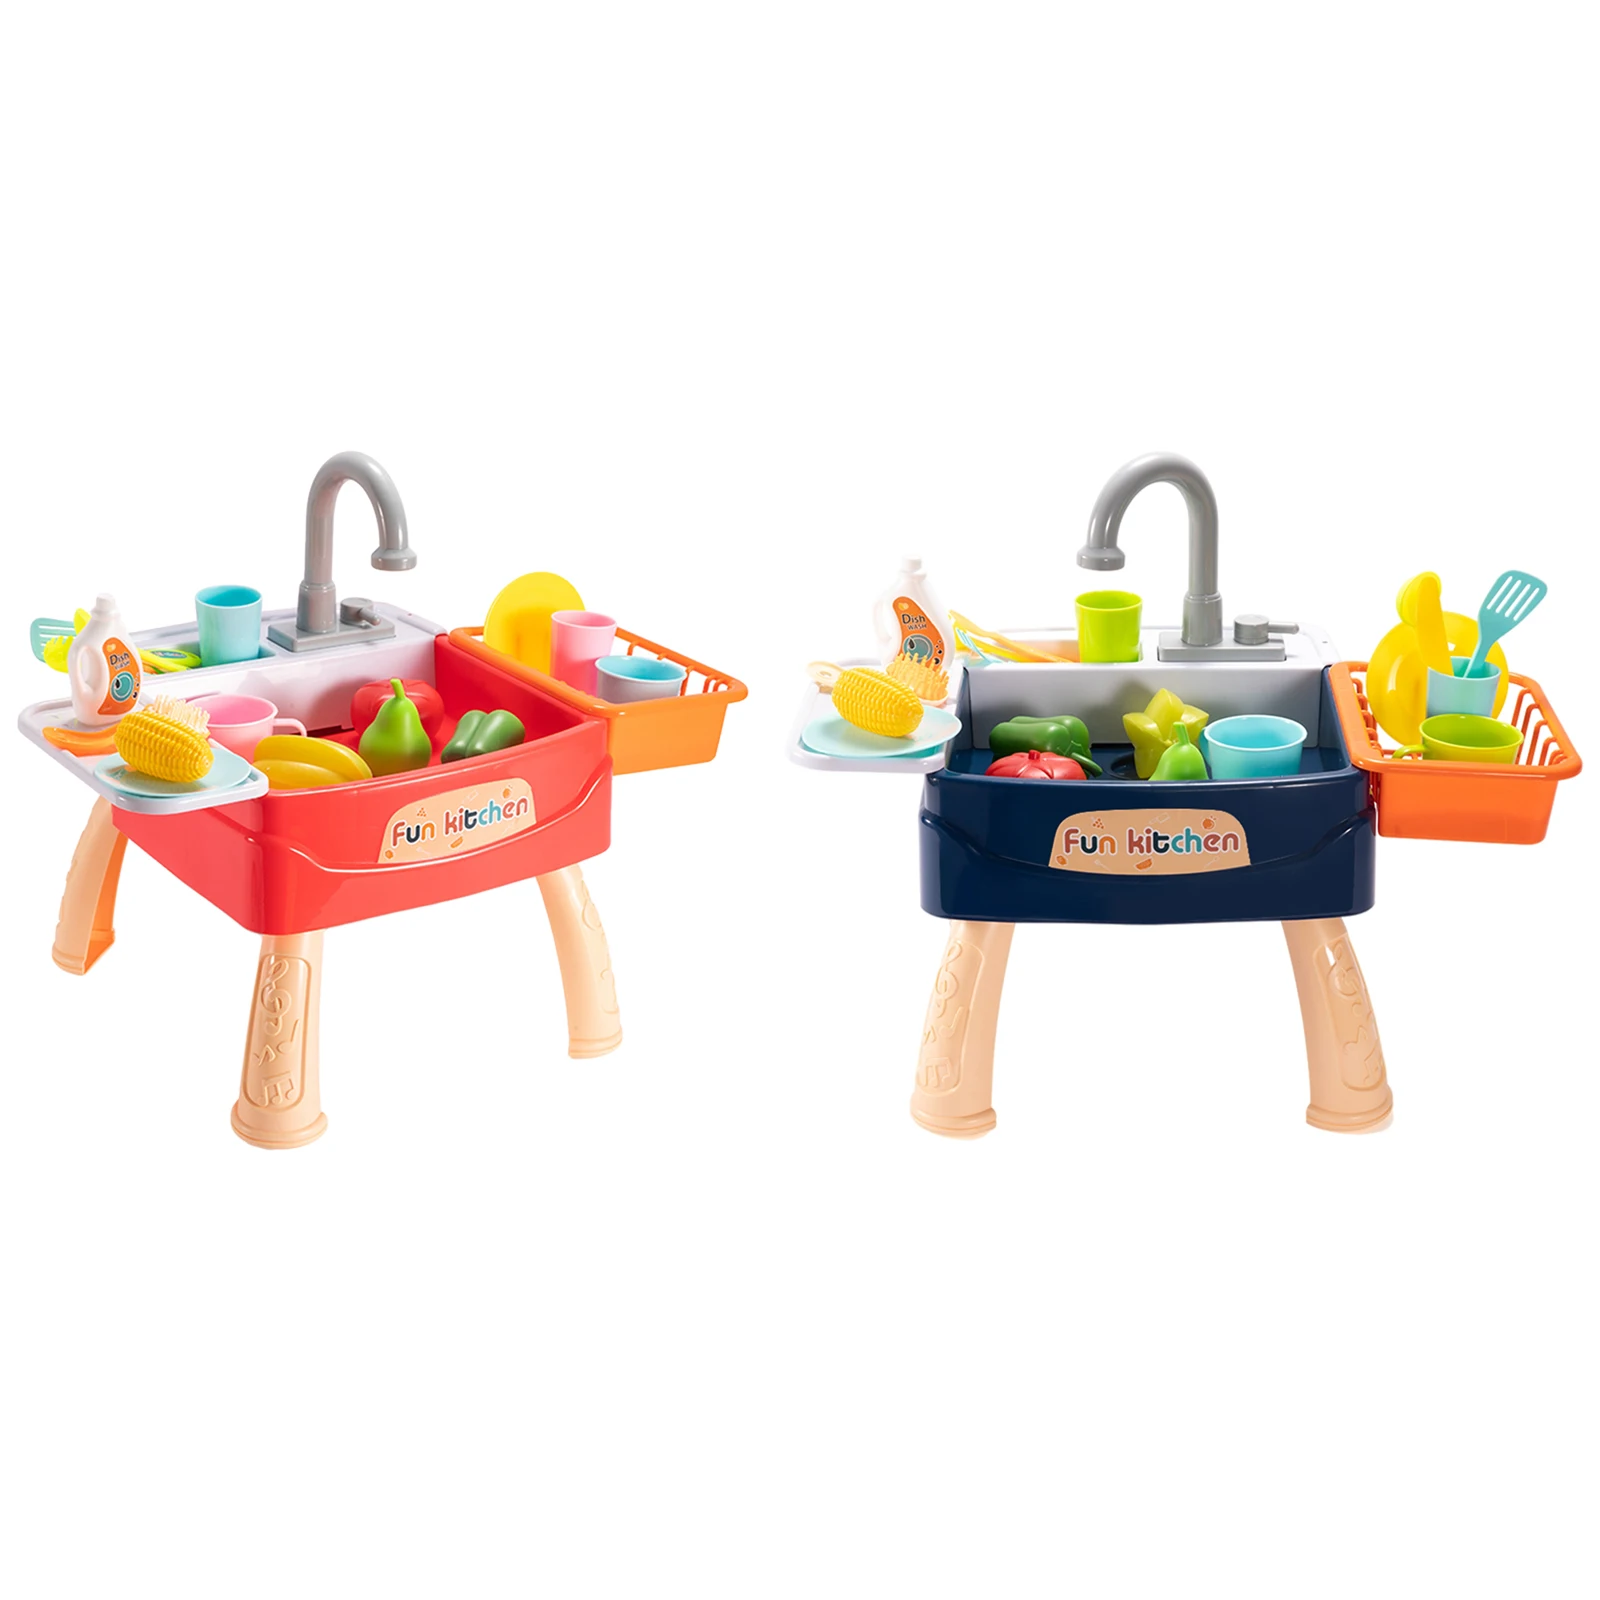 Children Sink Dishwashing Set Toy Kid Simulated Kitchen Toy Set Educational Play House Games Prop Sink Wash Suit Montessori Toy